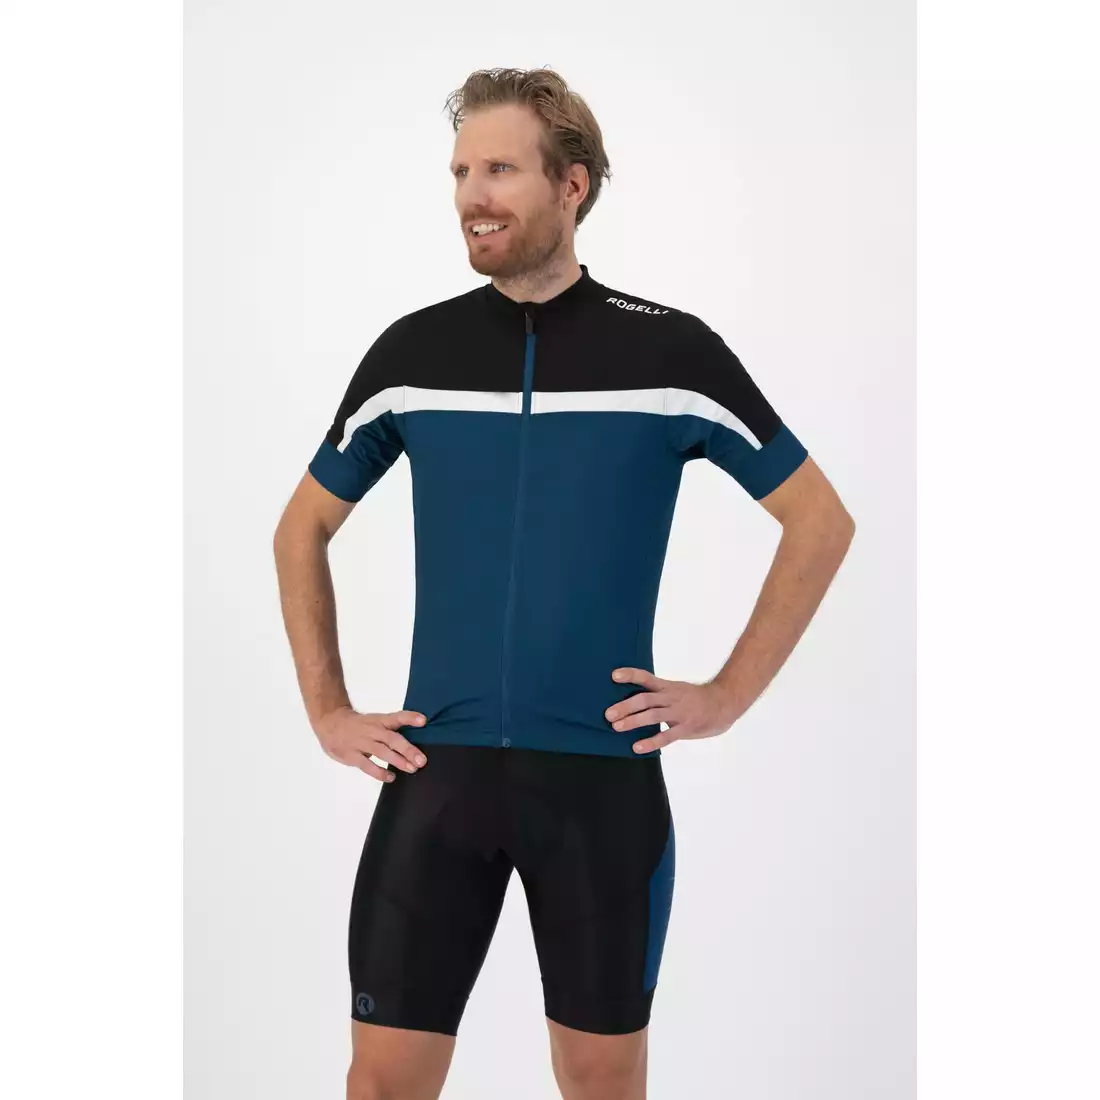 Rogelli COURSE tricou de ciclism masculin, negru și bleumarin